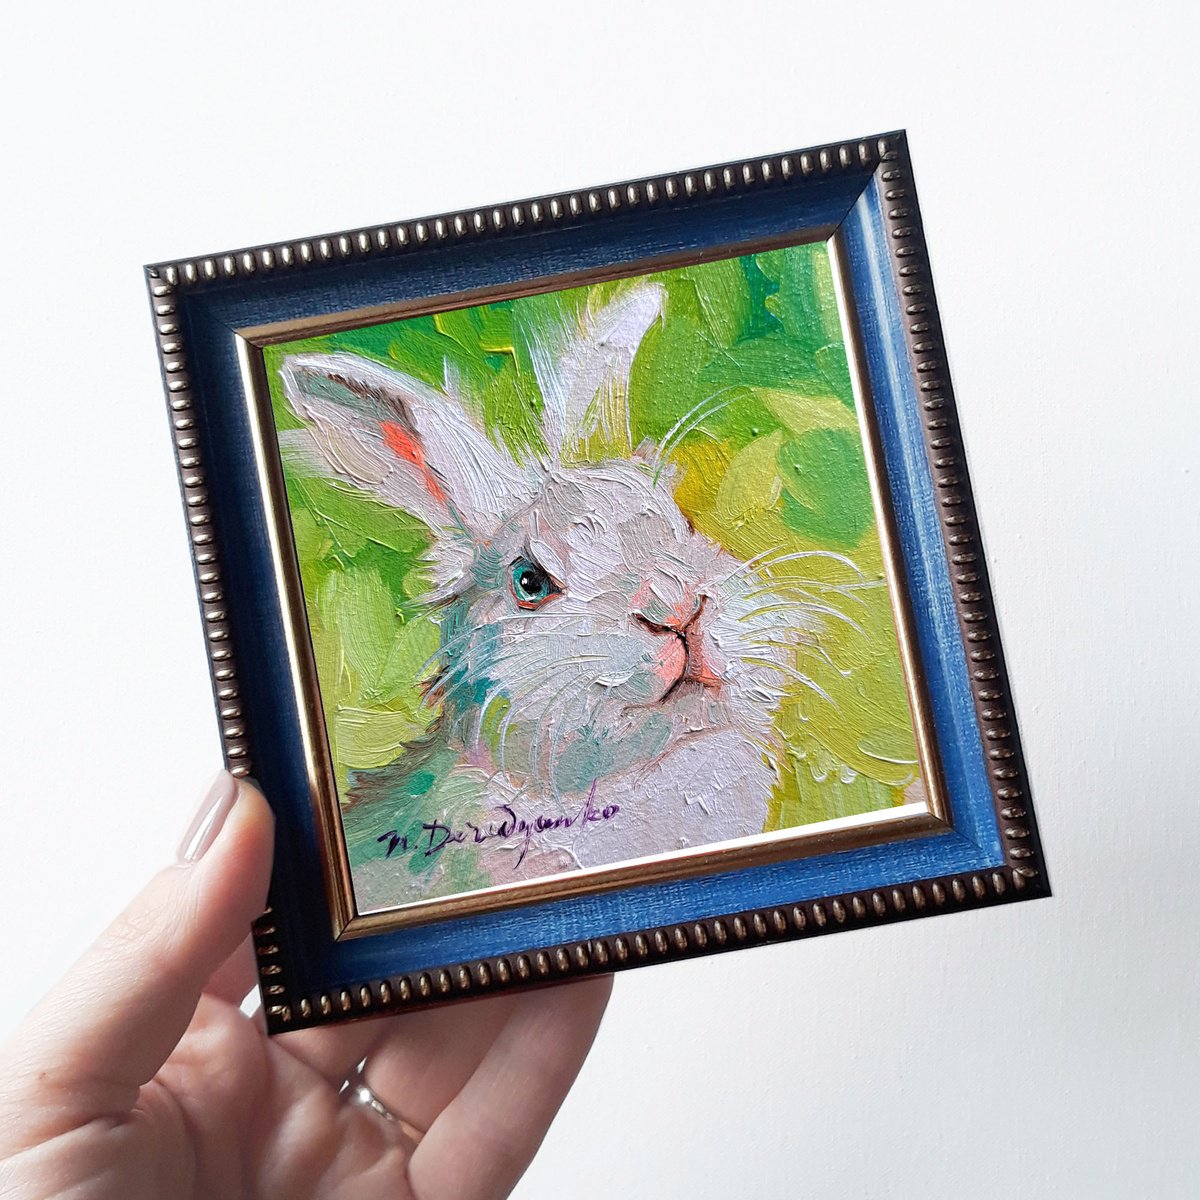 White rabbit painting original framed 4x4, Small painting framed rabbit artwork by Nataly Derevyanko